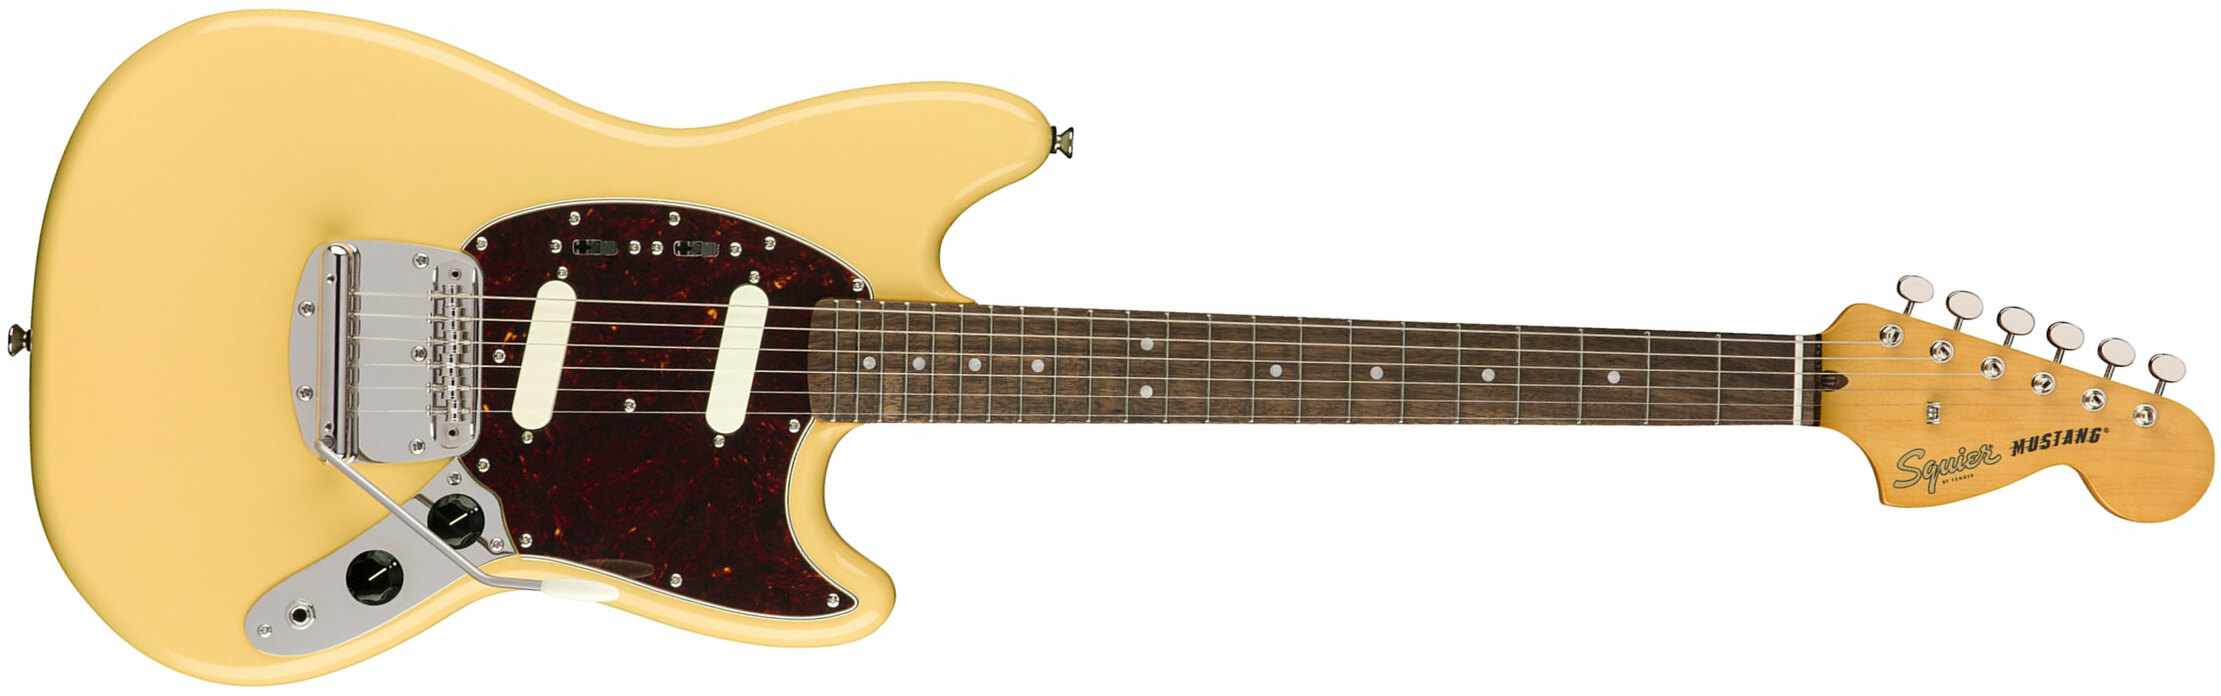 Squier Mustang  Classic Vibe 60s 2019 Lau - Vintage White - Retro rock electric guitar - Main picture